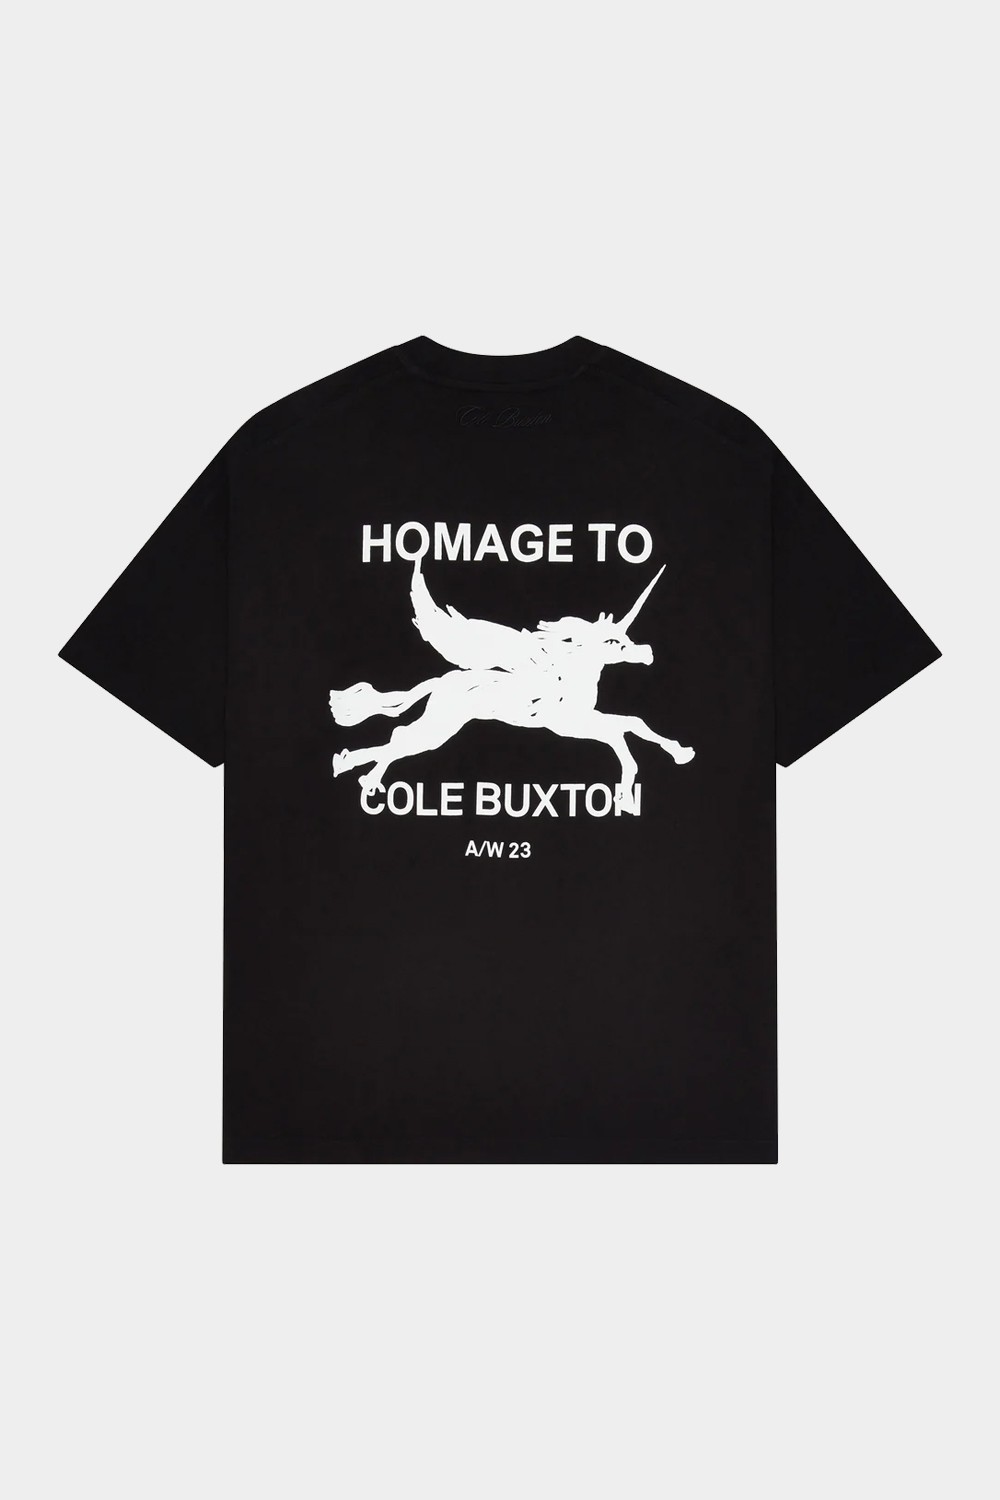 C.B. Oversized Homage T Shirt Black (CLBXT9)